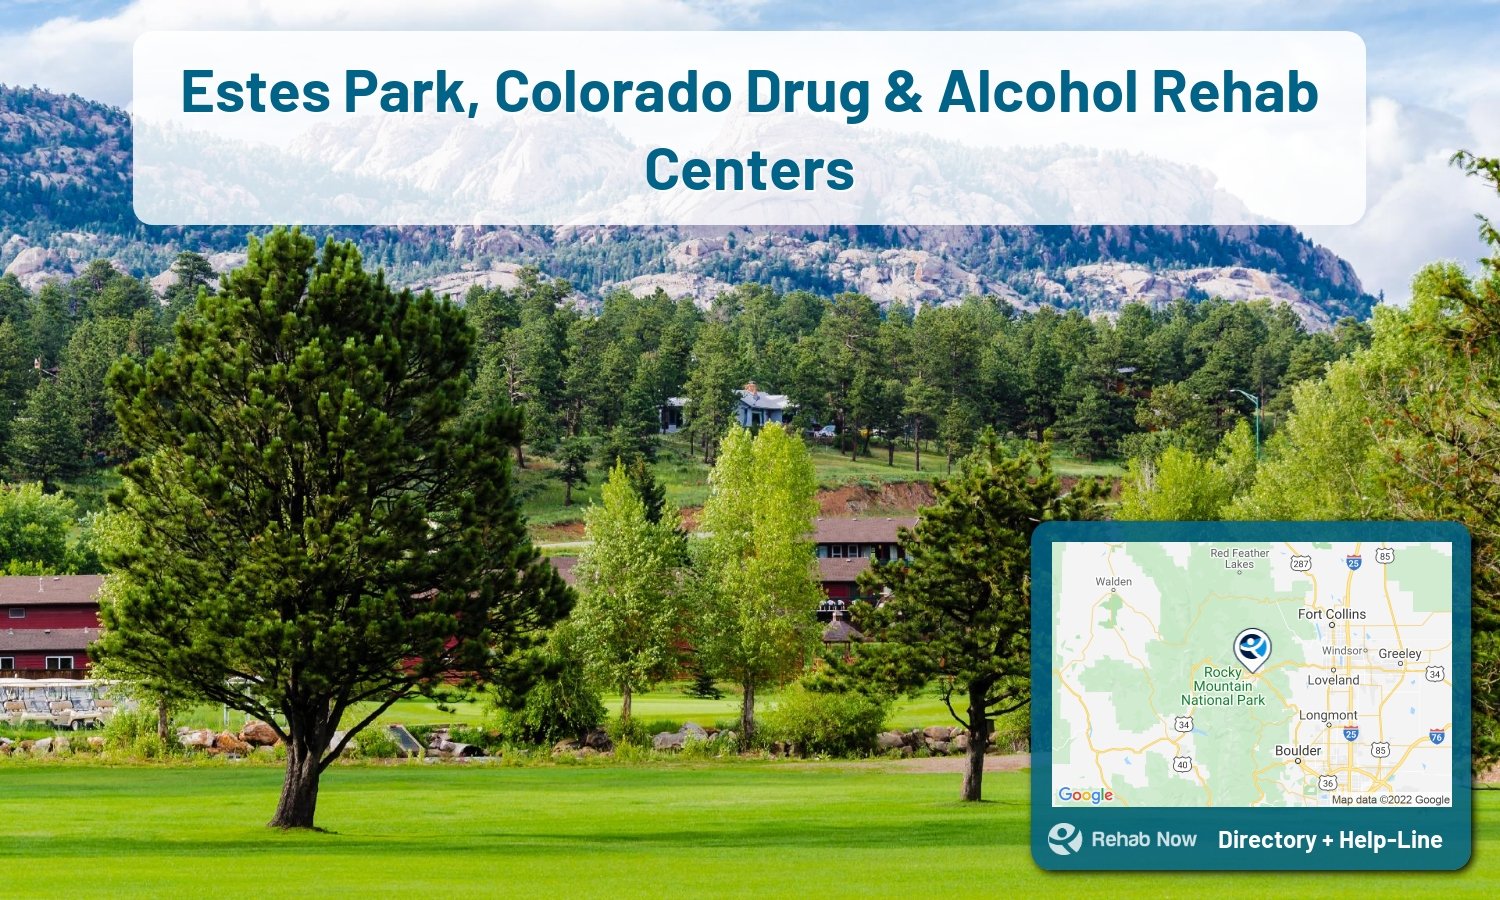 Estes Park, CO Treatment Centers. Find drug rehab in Estes Park, Colorado, or detox and treatment programs. Get the right help now!